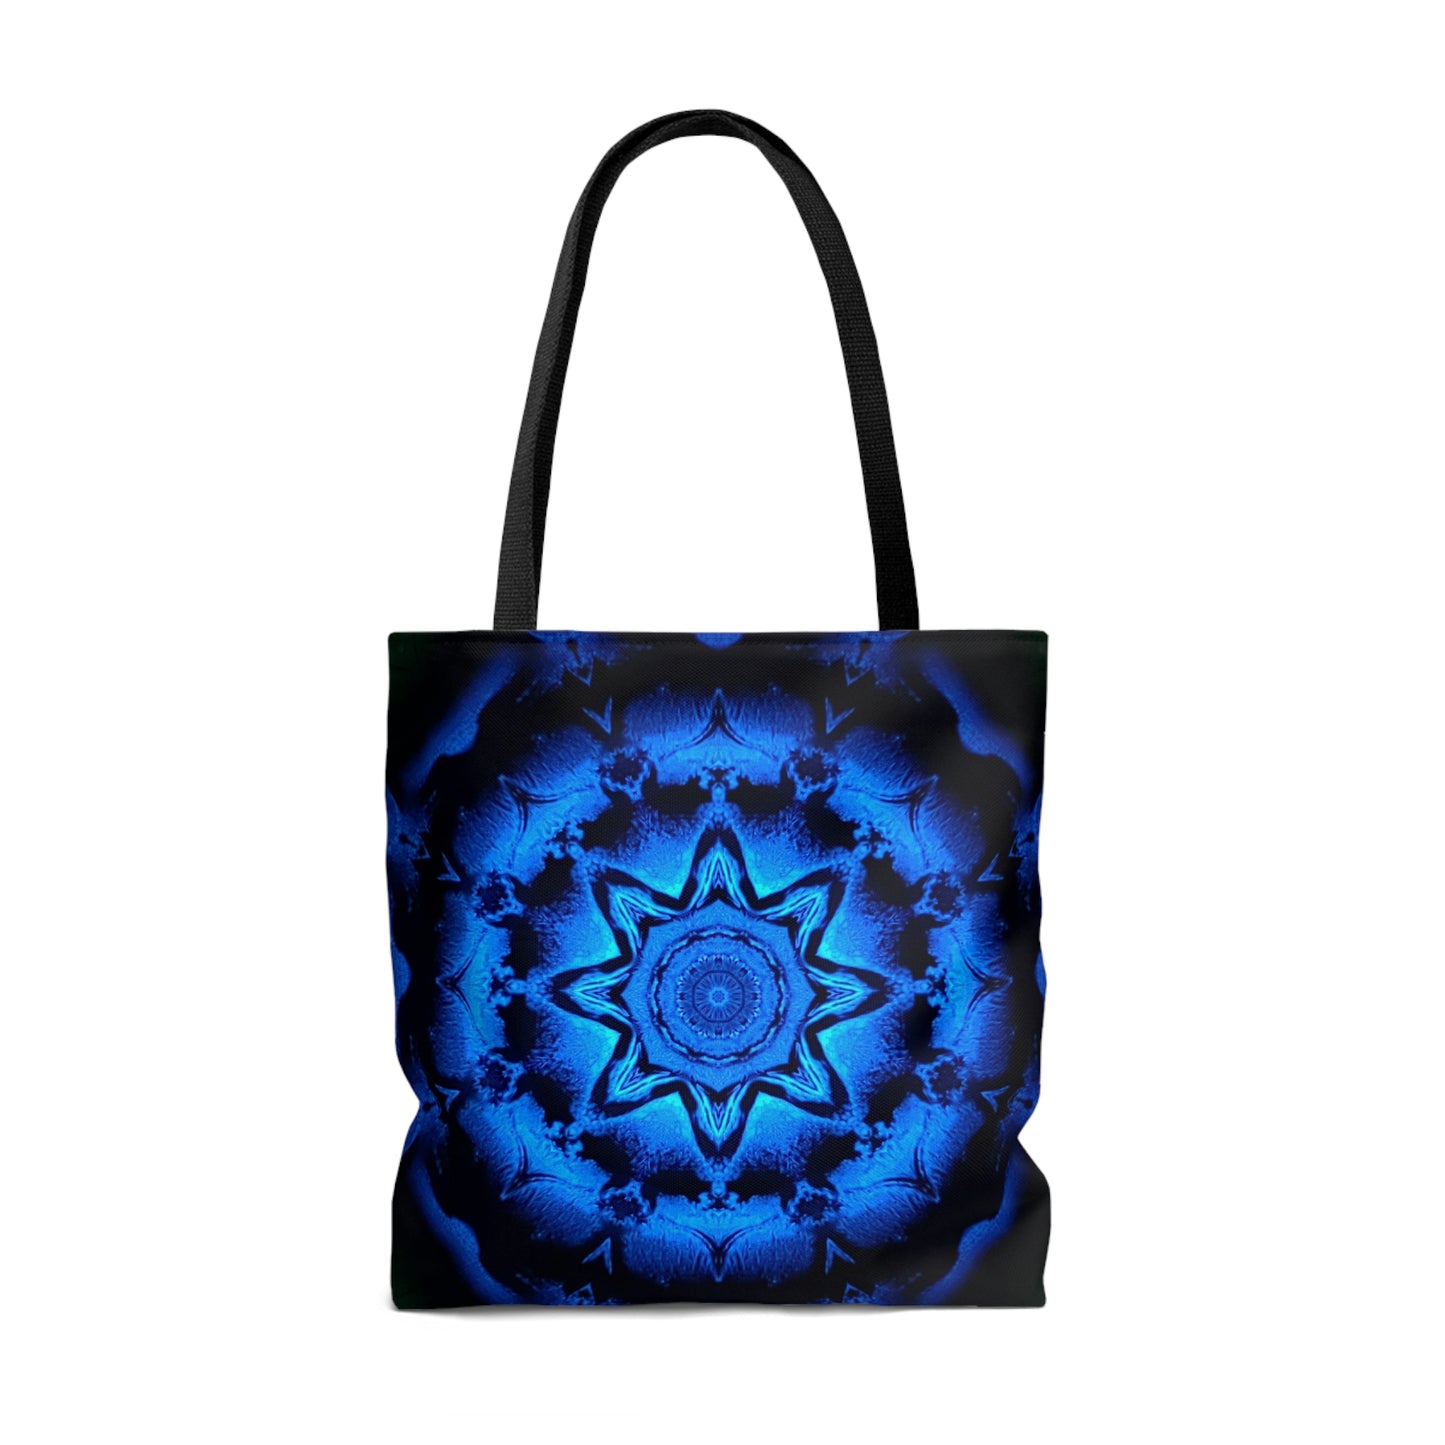 "Cobalt Dreams" Panache Tote Bag